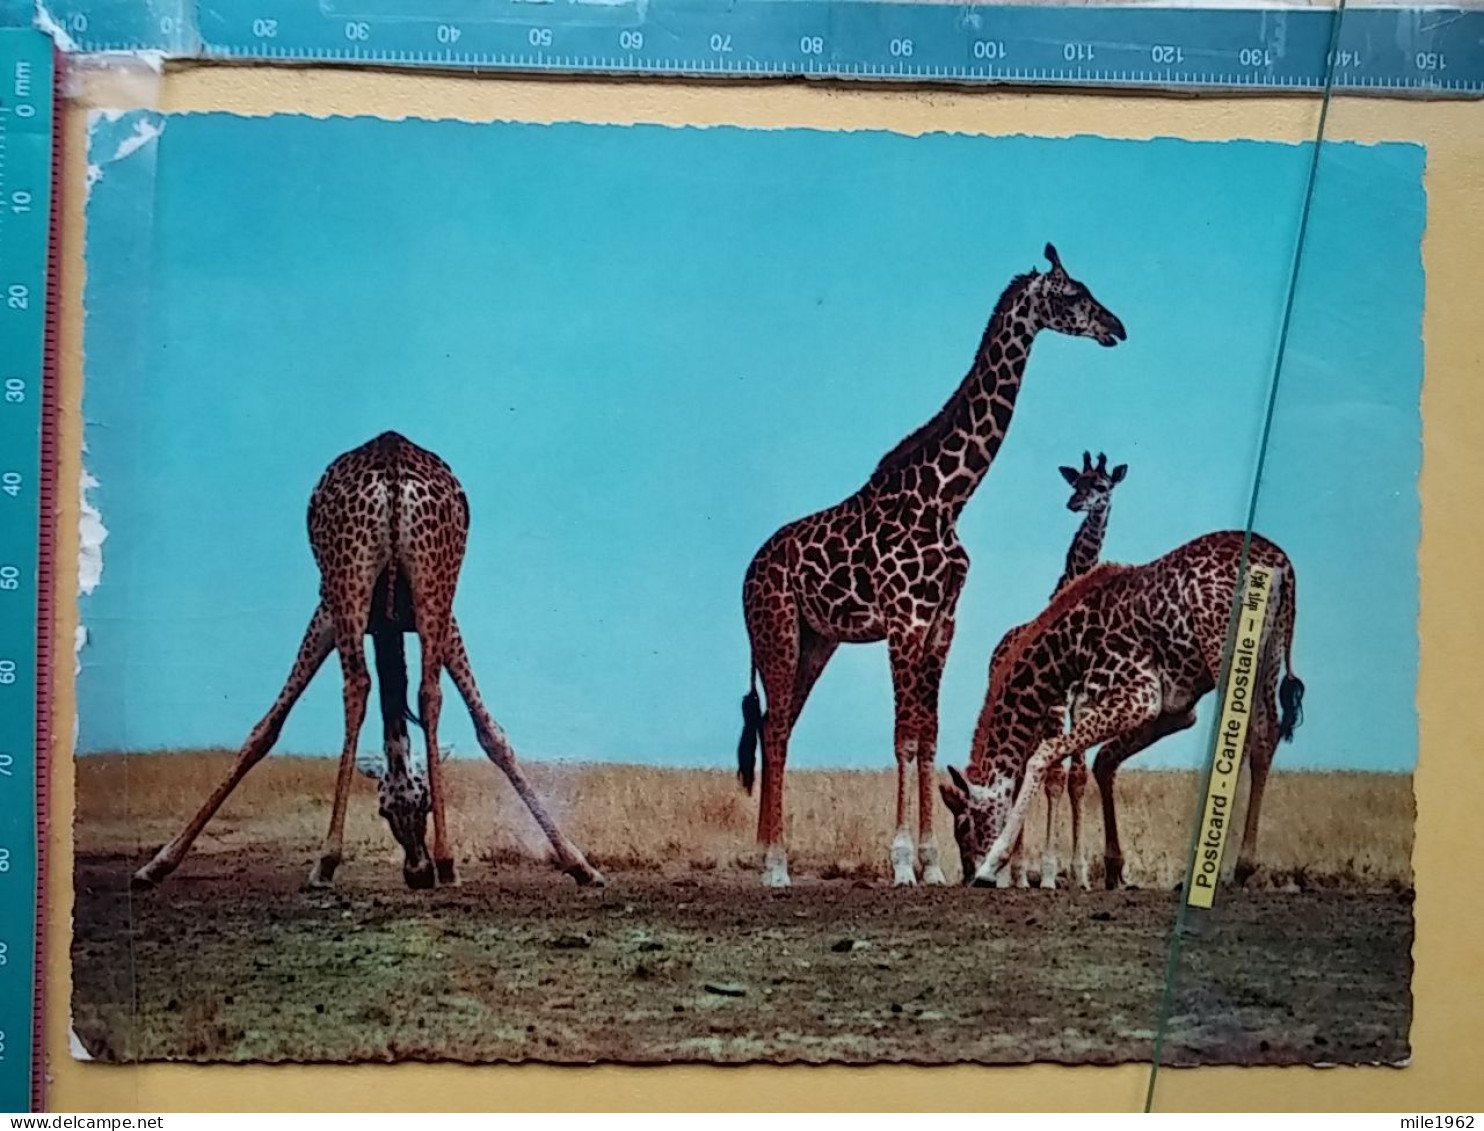 KOV 506-49 - GIRAFFE - Giraffen